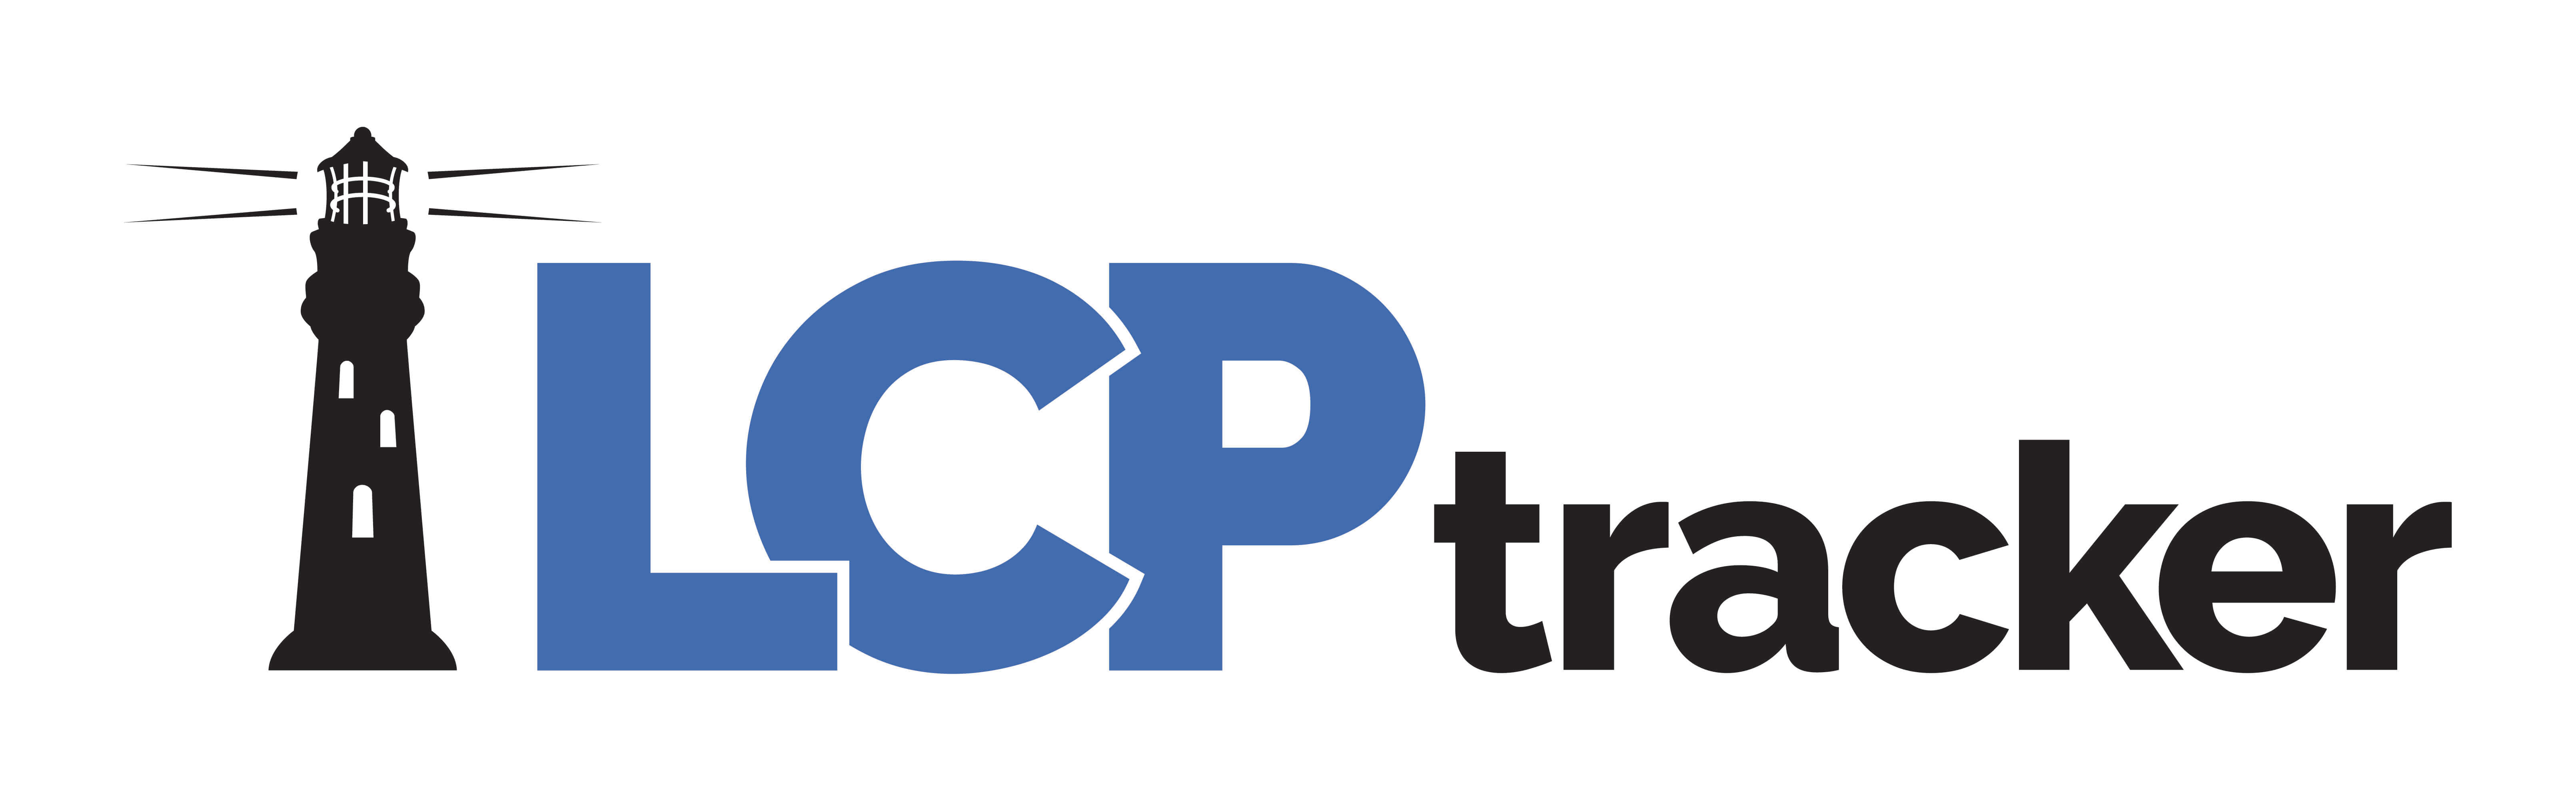 LCP tracker logo